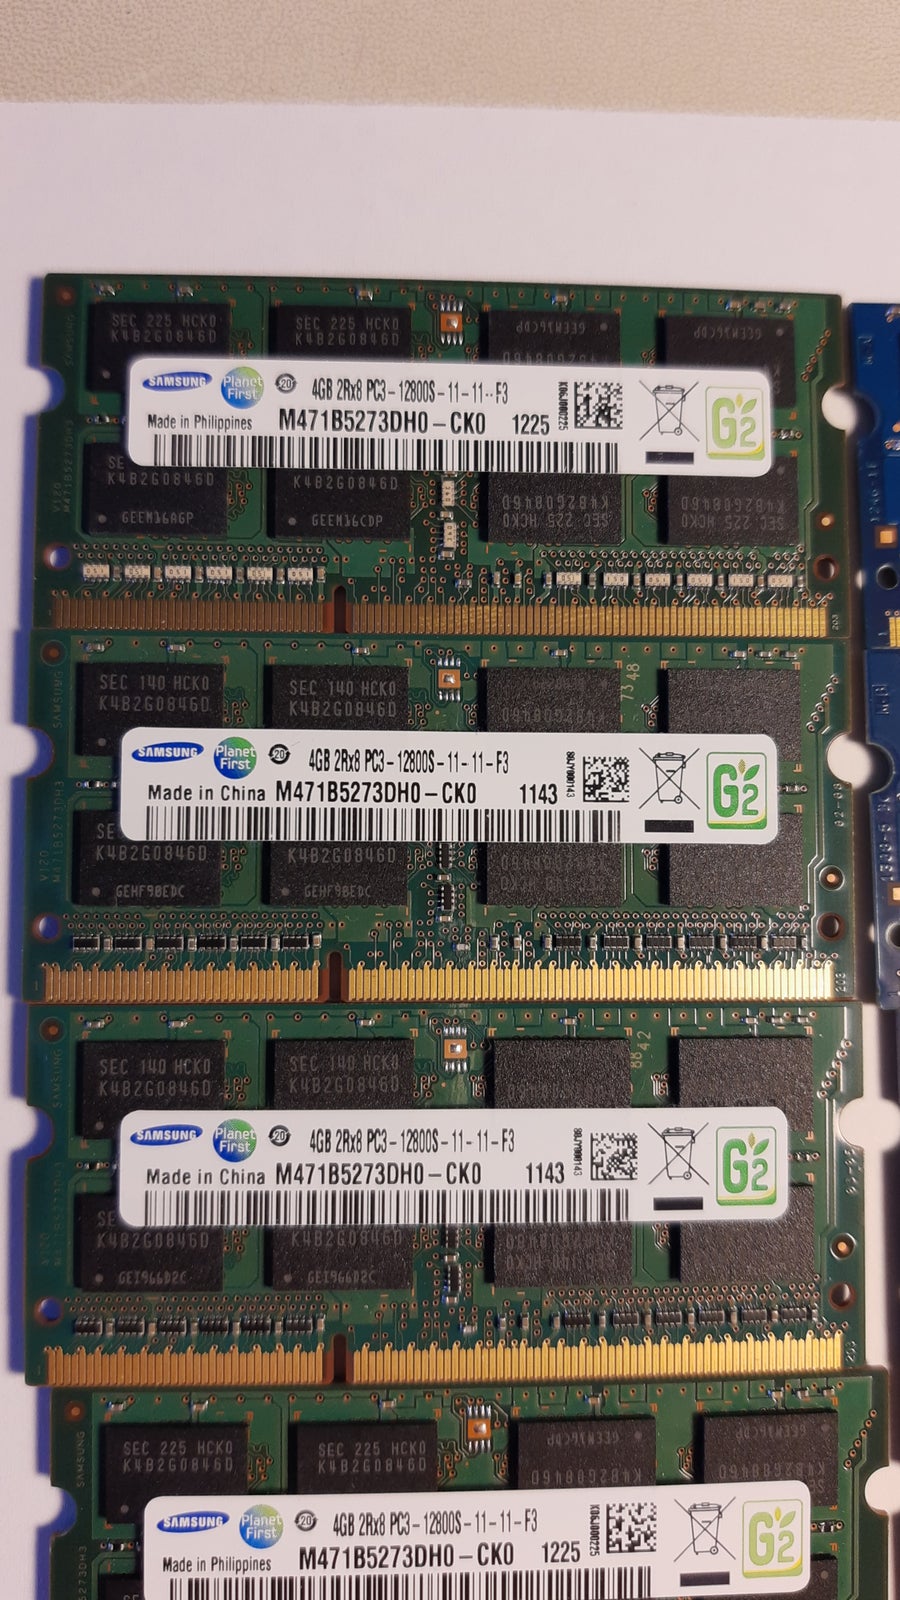 Blandet, 4 GB, DDR3 SDRAM